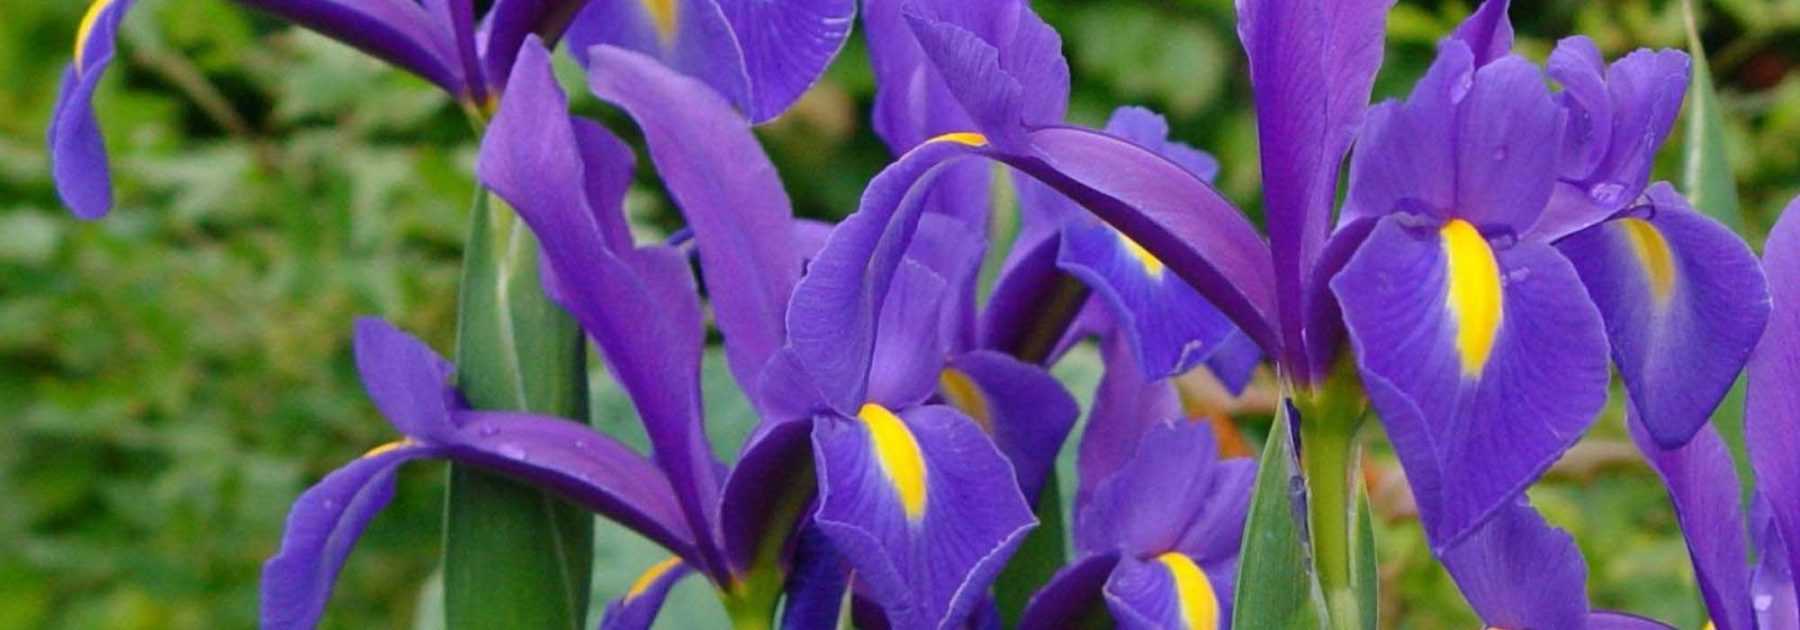 Iris de Hollande : planter, cultiver